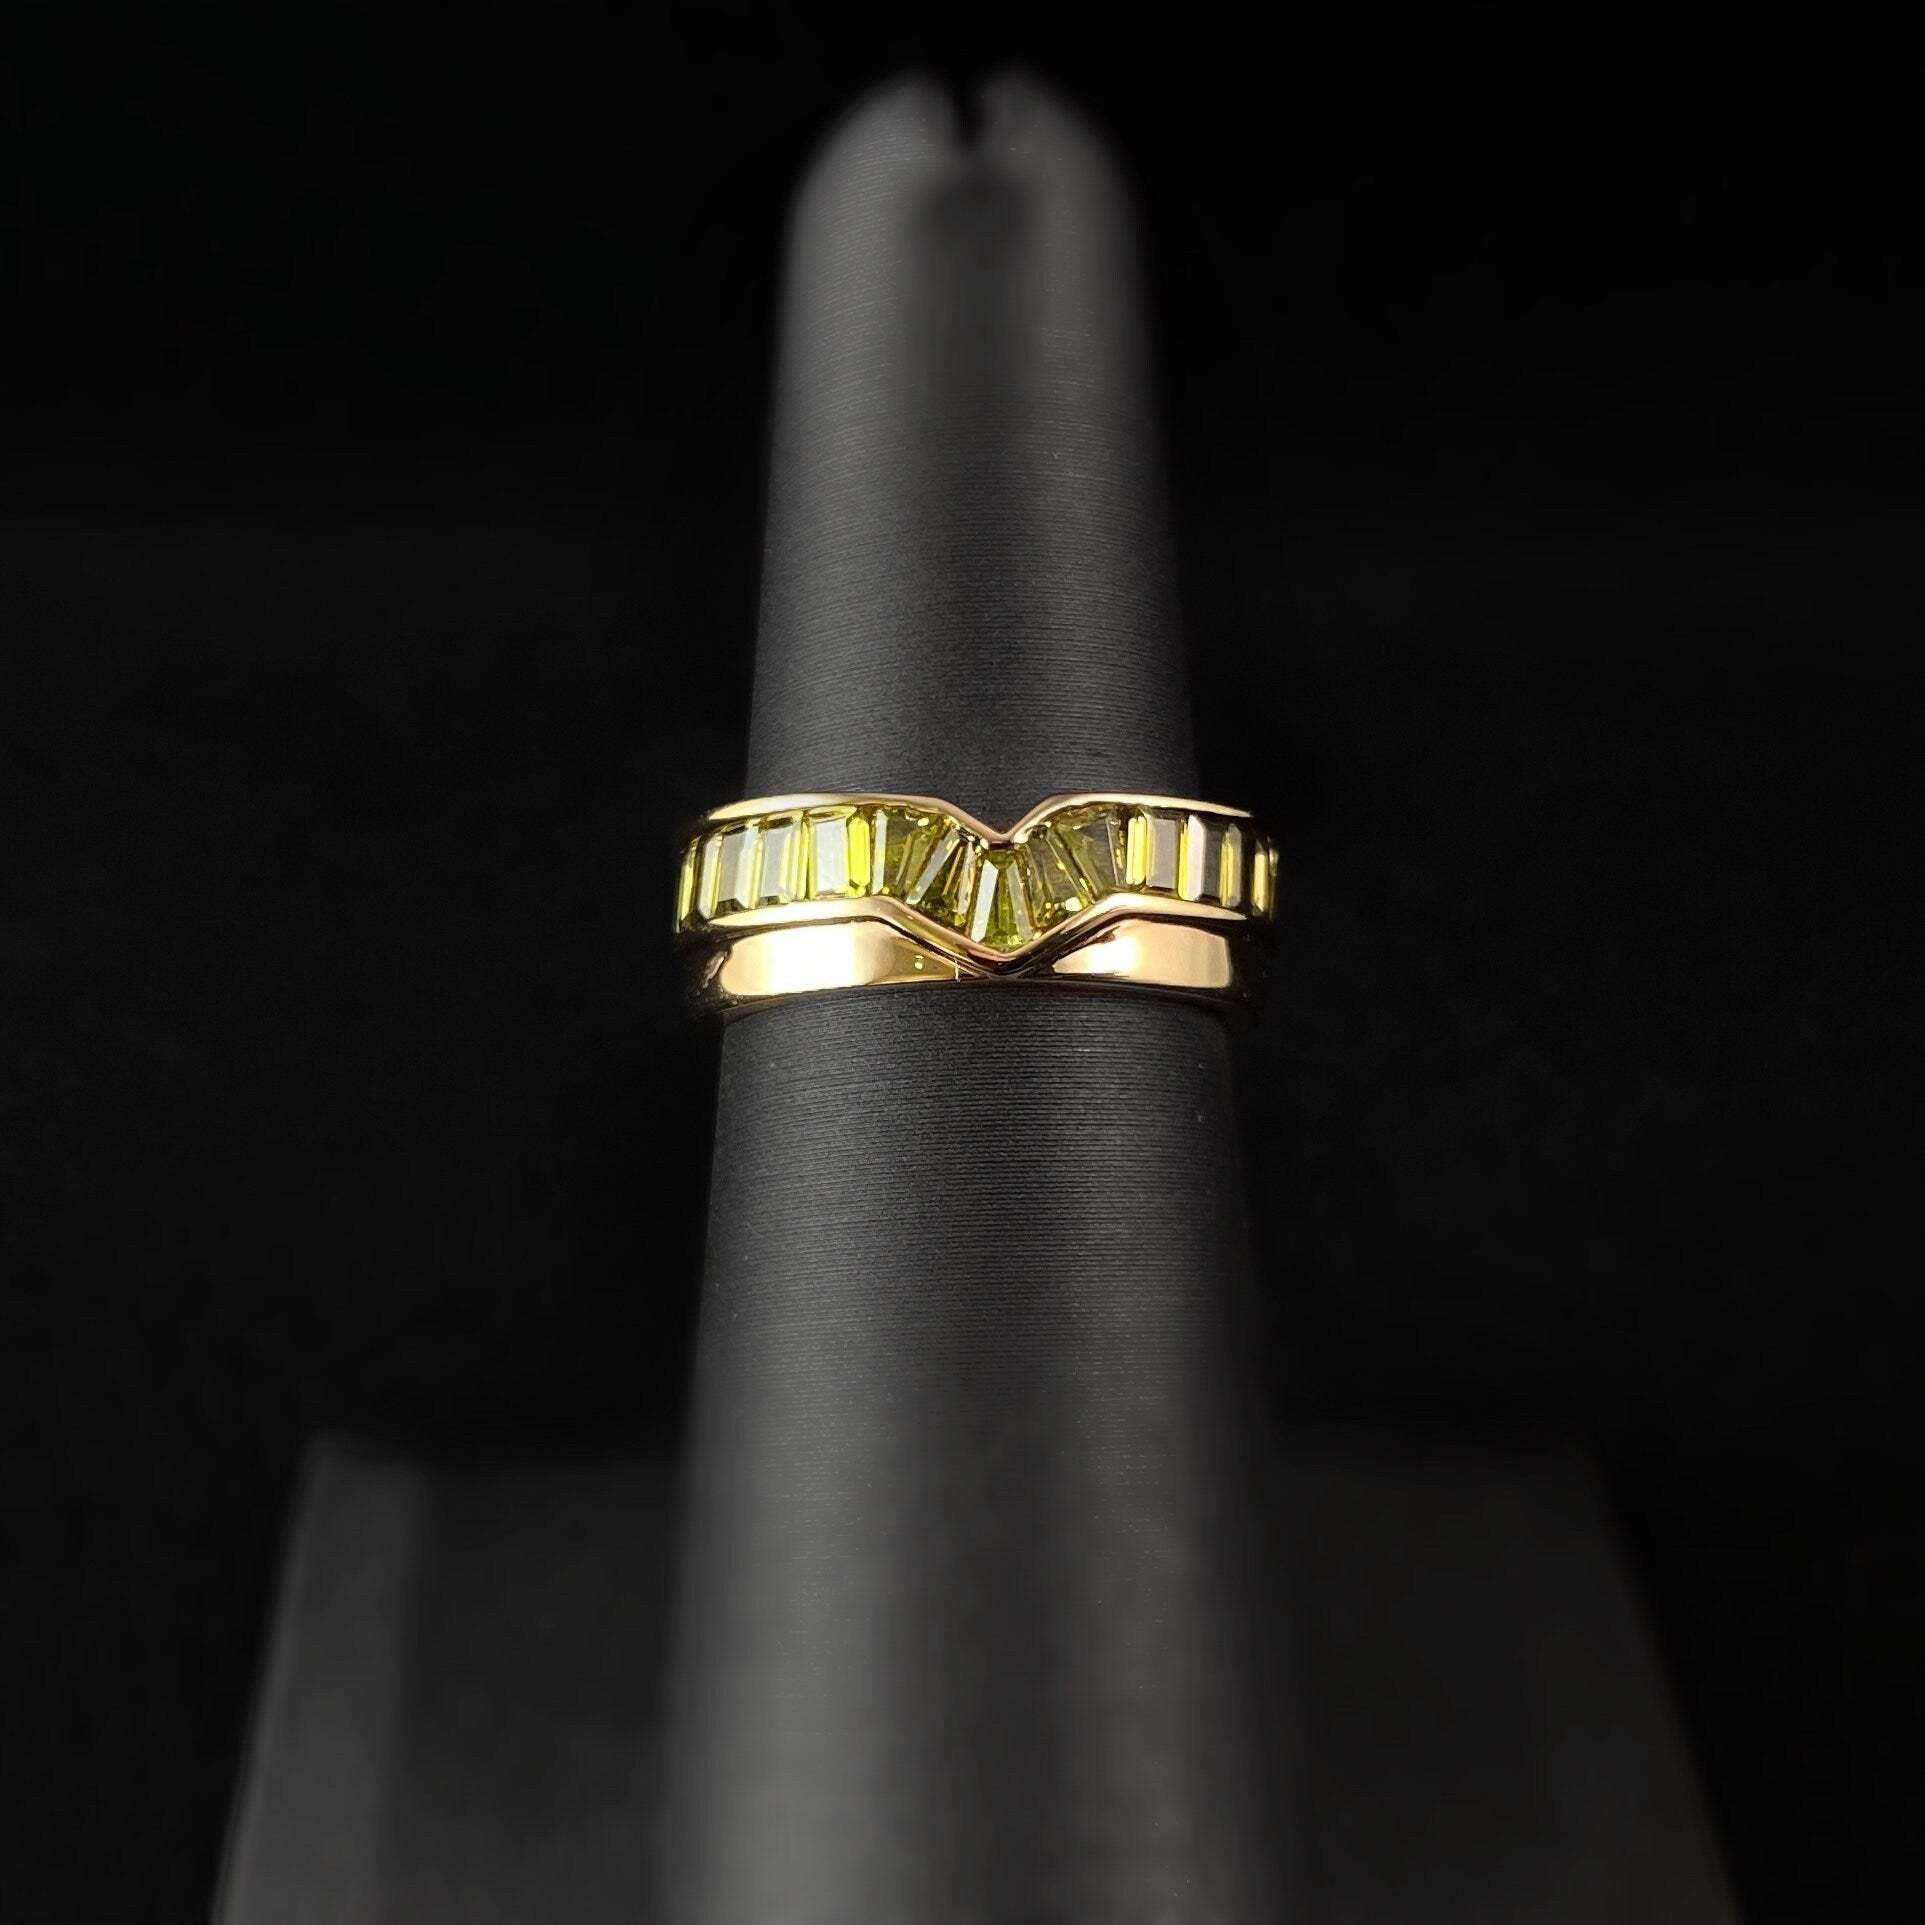 1920s Art Deco Style Gold Ring with Chevron Peak Peridot Green Stones - Size 6